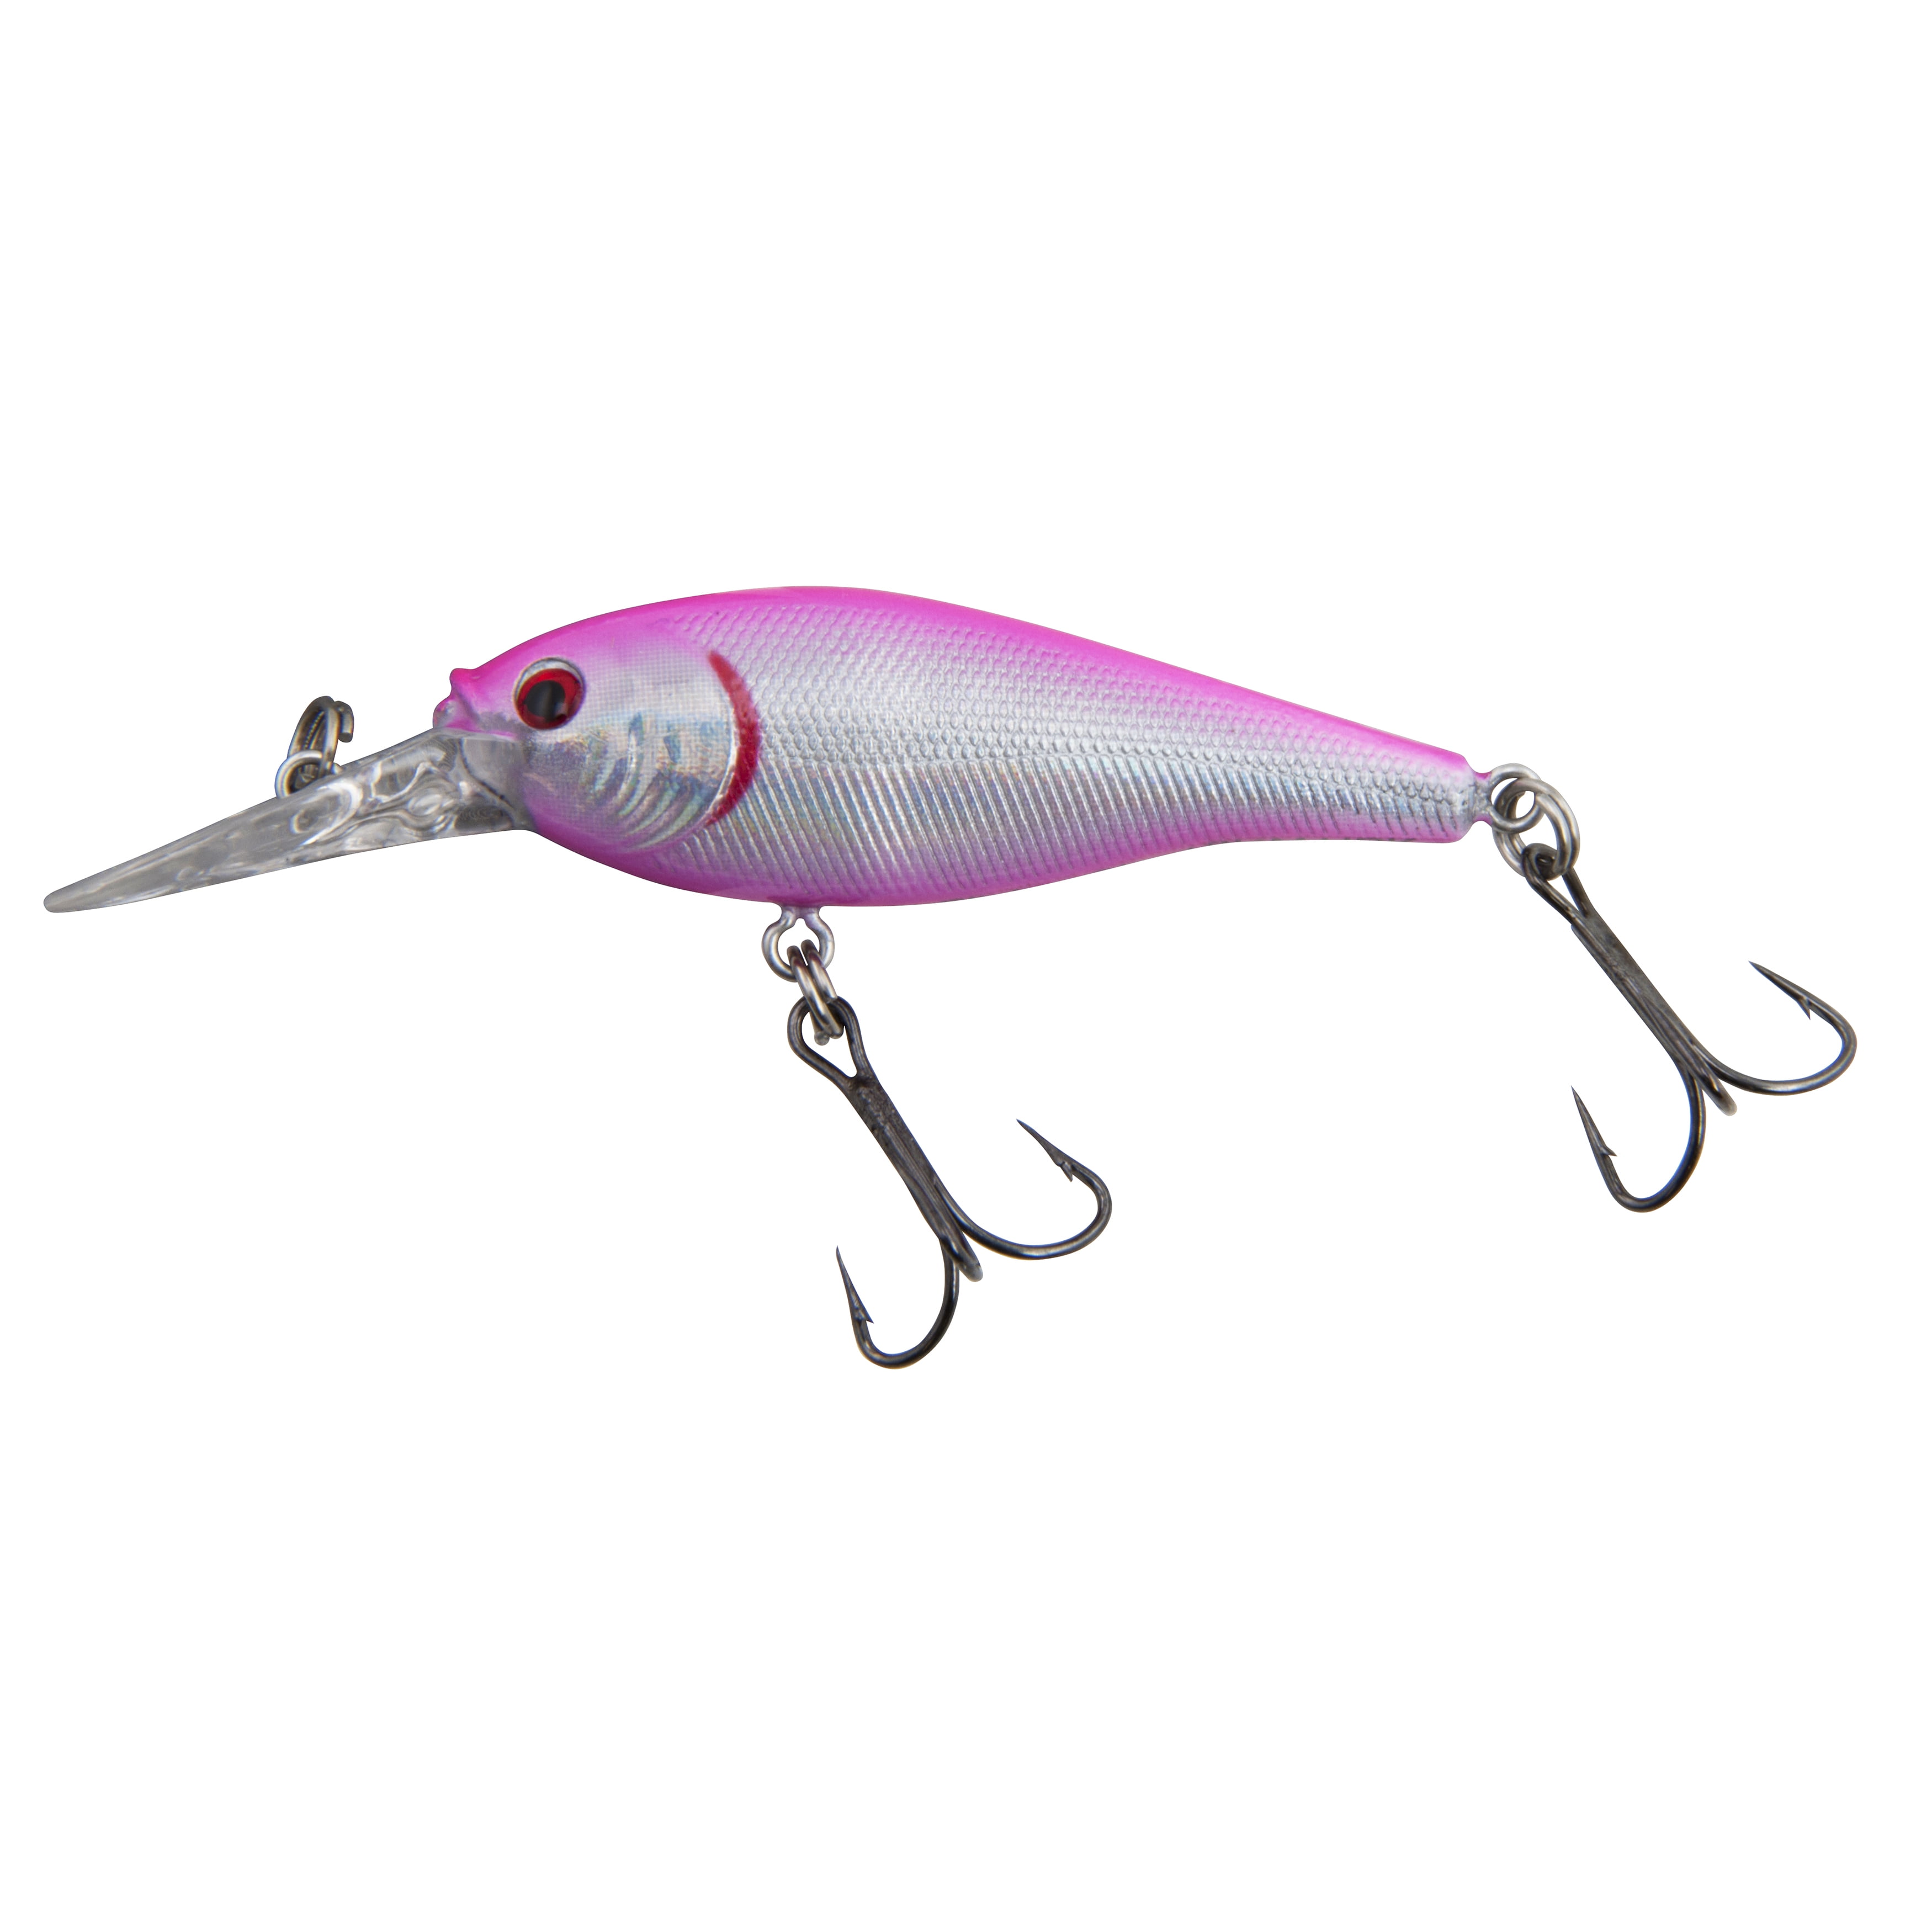 Berkley Flicker Shad Fishing Lure, Hot Pink, 1/8 oz 